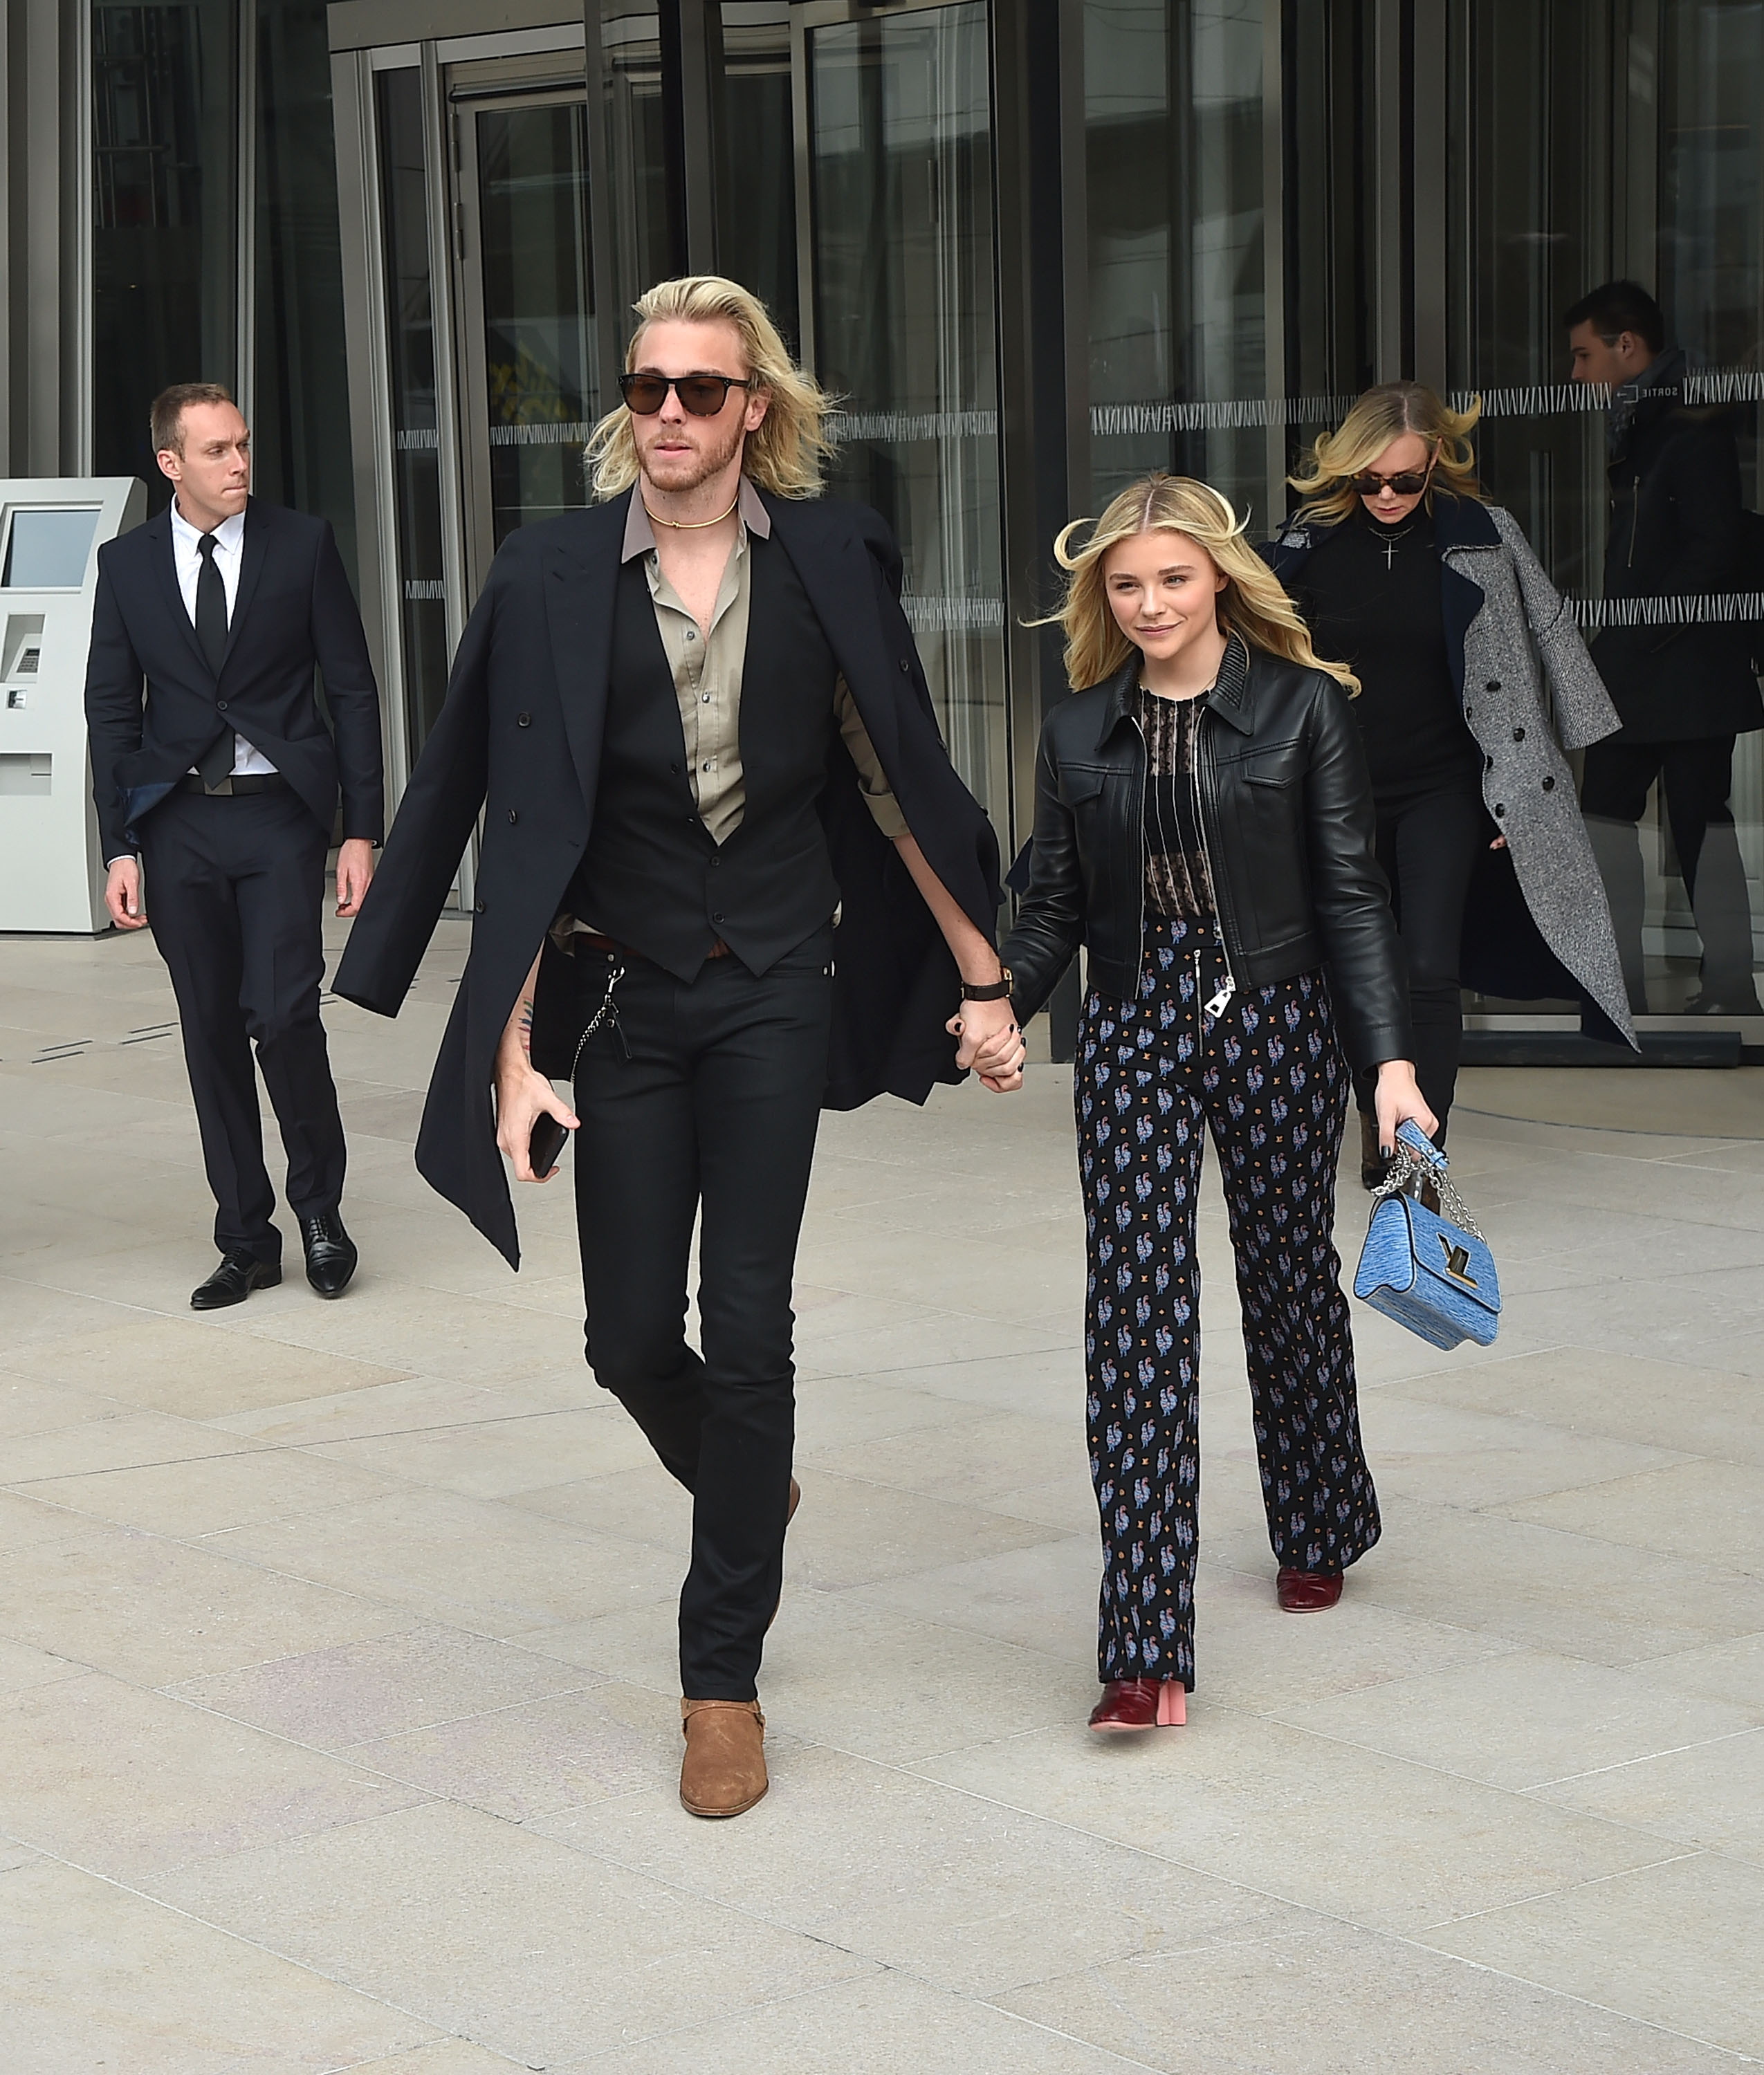 Chloe Grace Moretz and Trevor Moretz depart the Louis Vuitton show in Paris on 11 March 2015. | Source: Getty Images